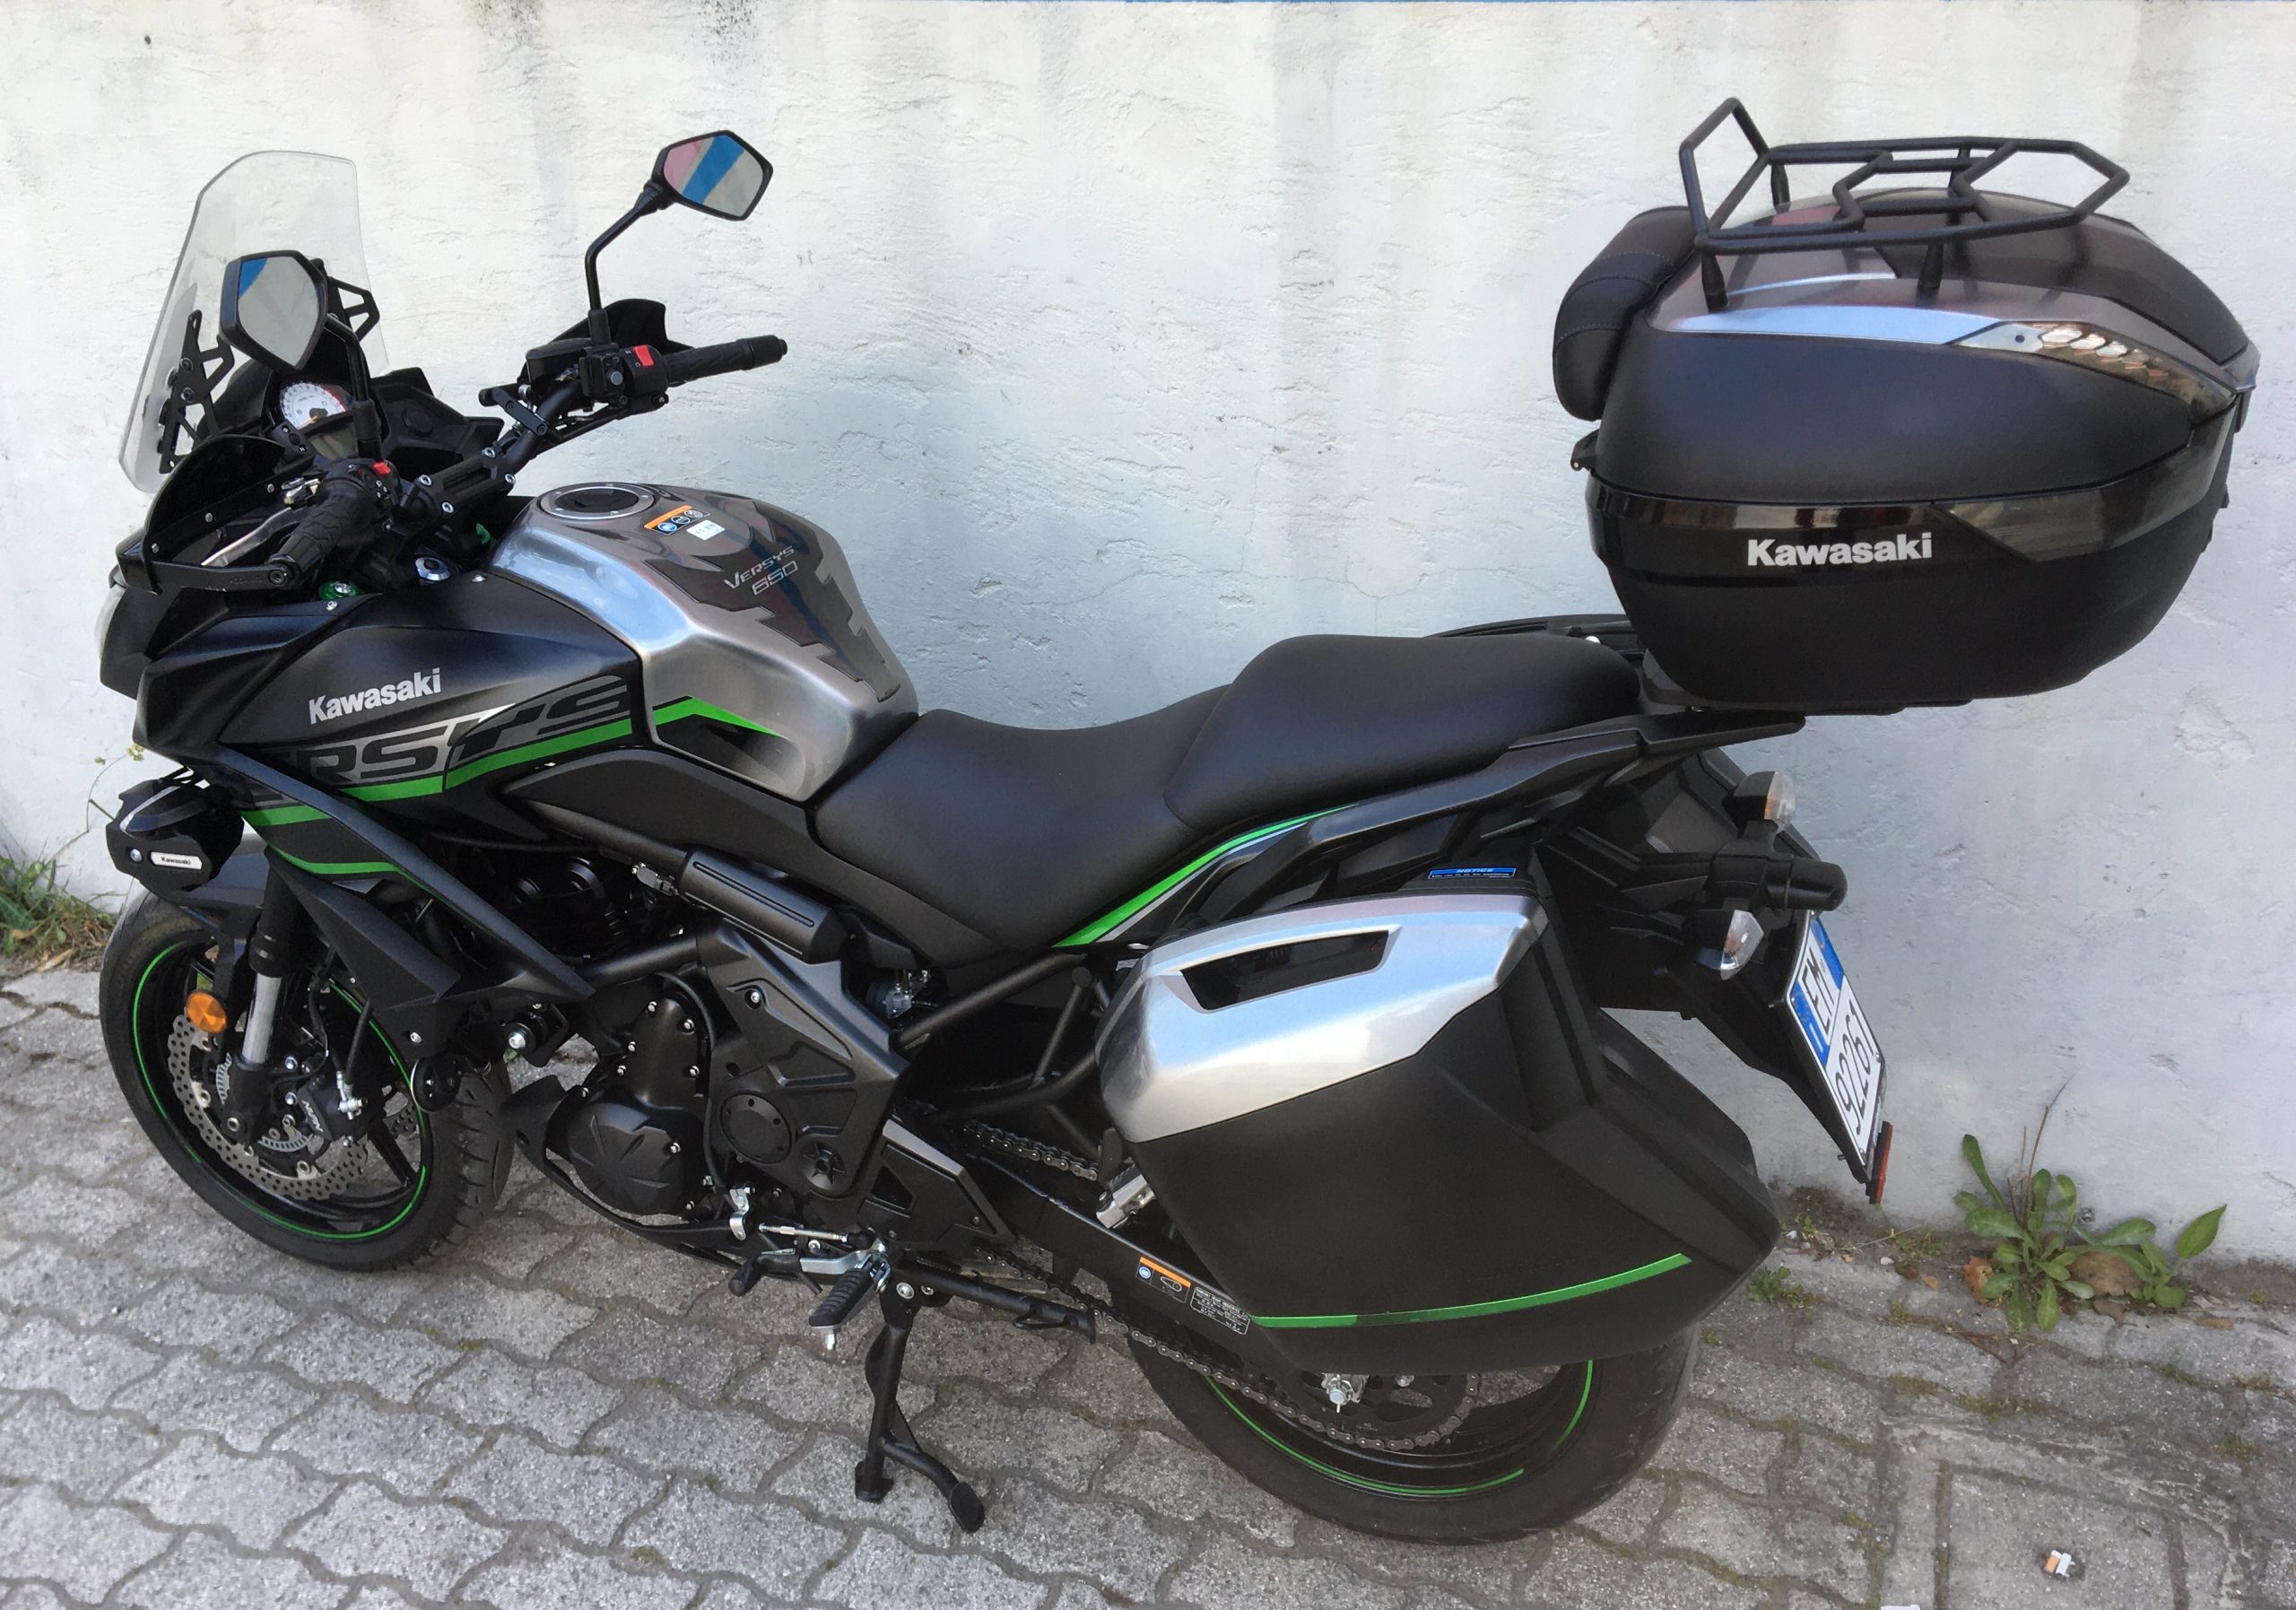 Kawasaki Versys 650 Tourer Plus – 04/2019 – Km 24500